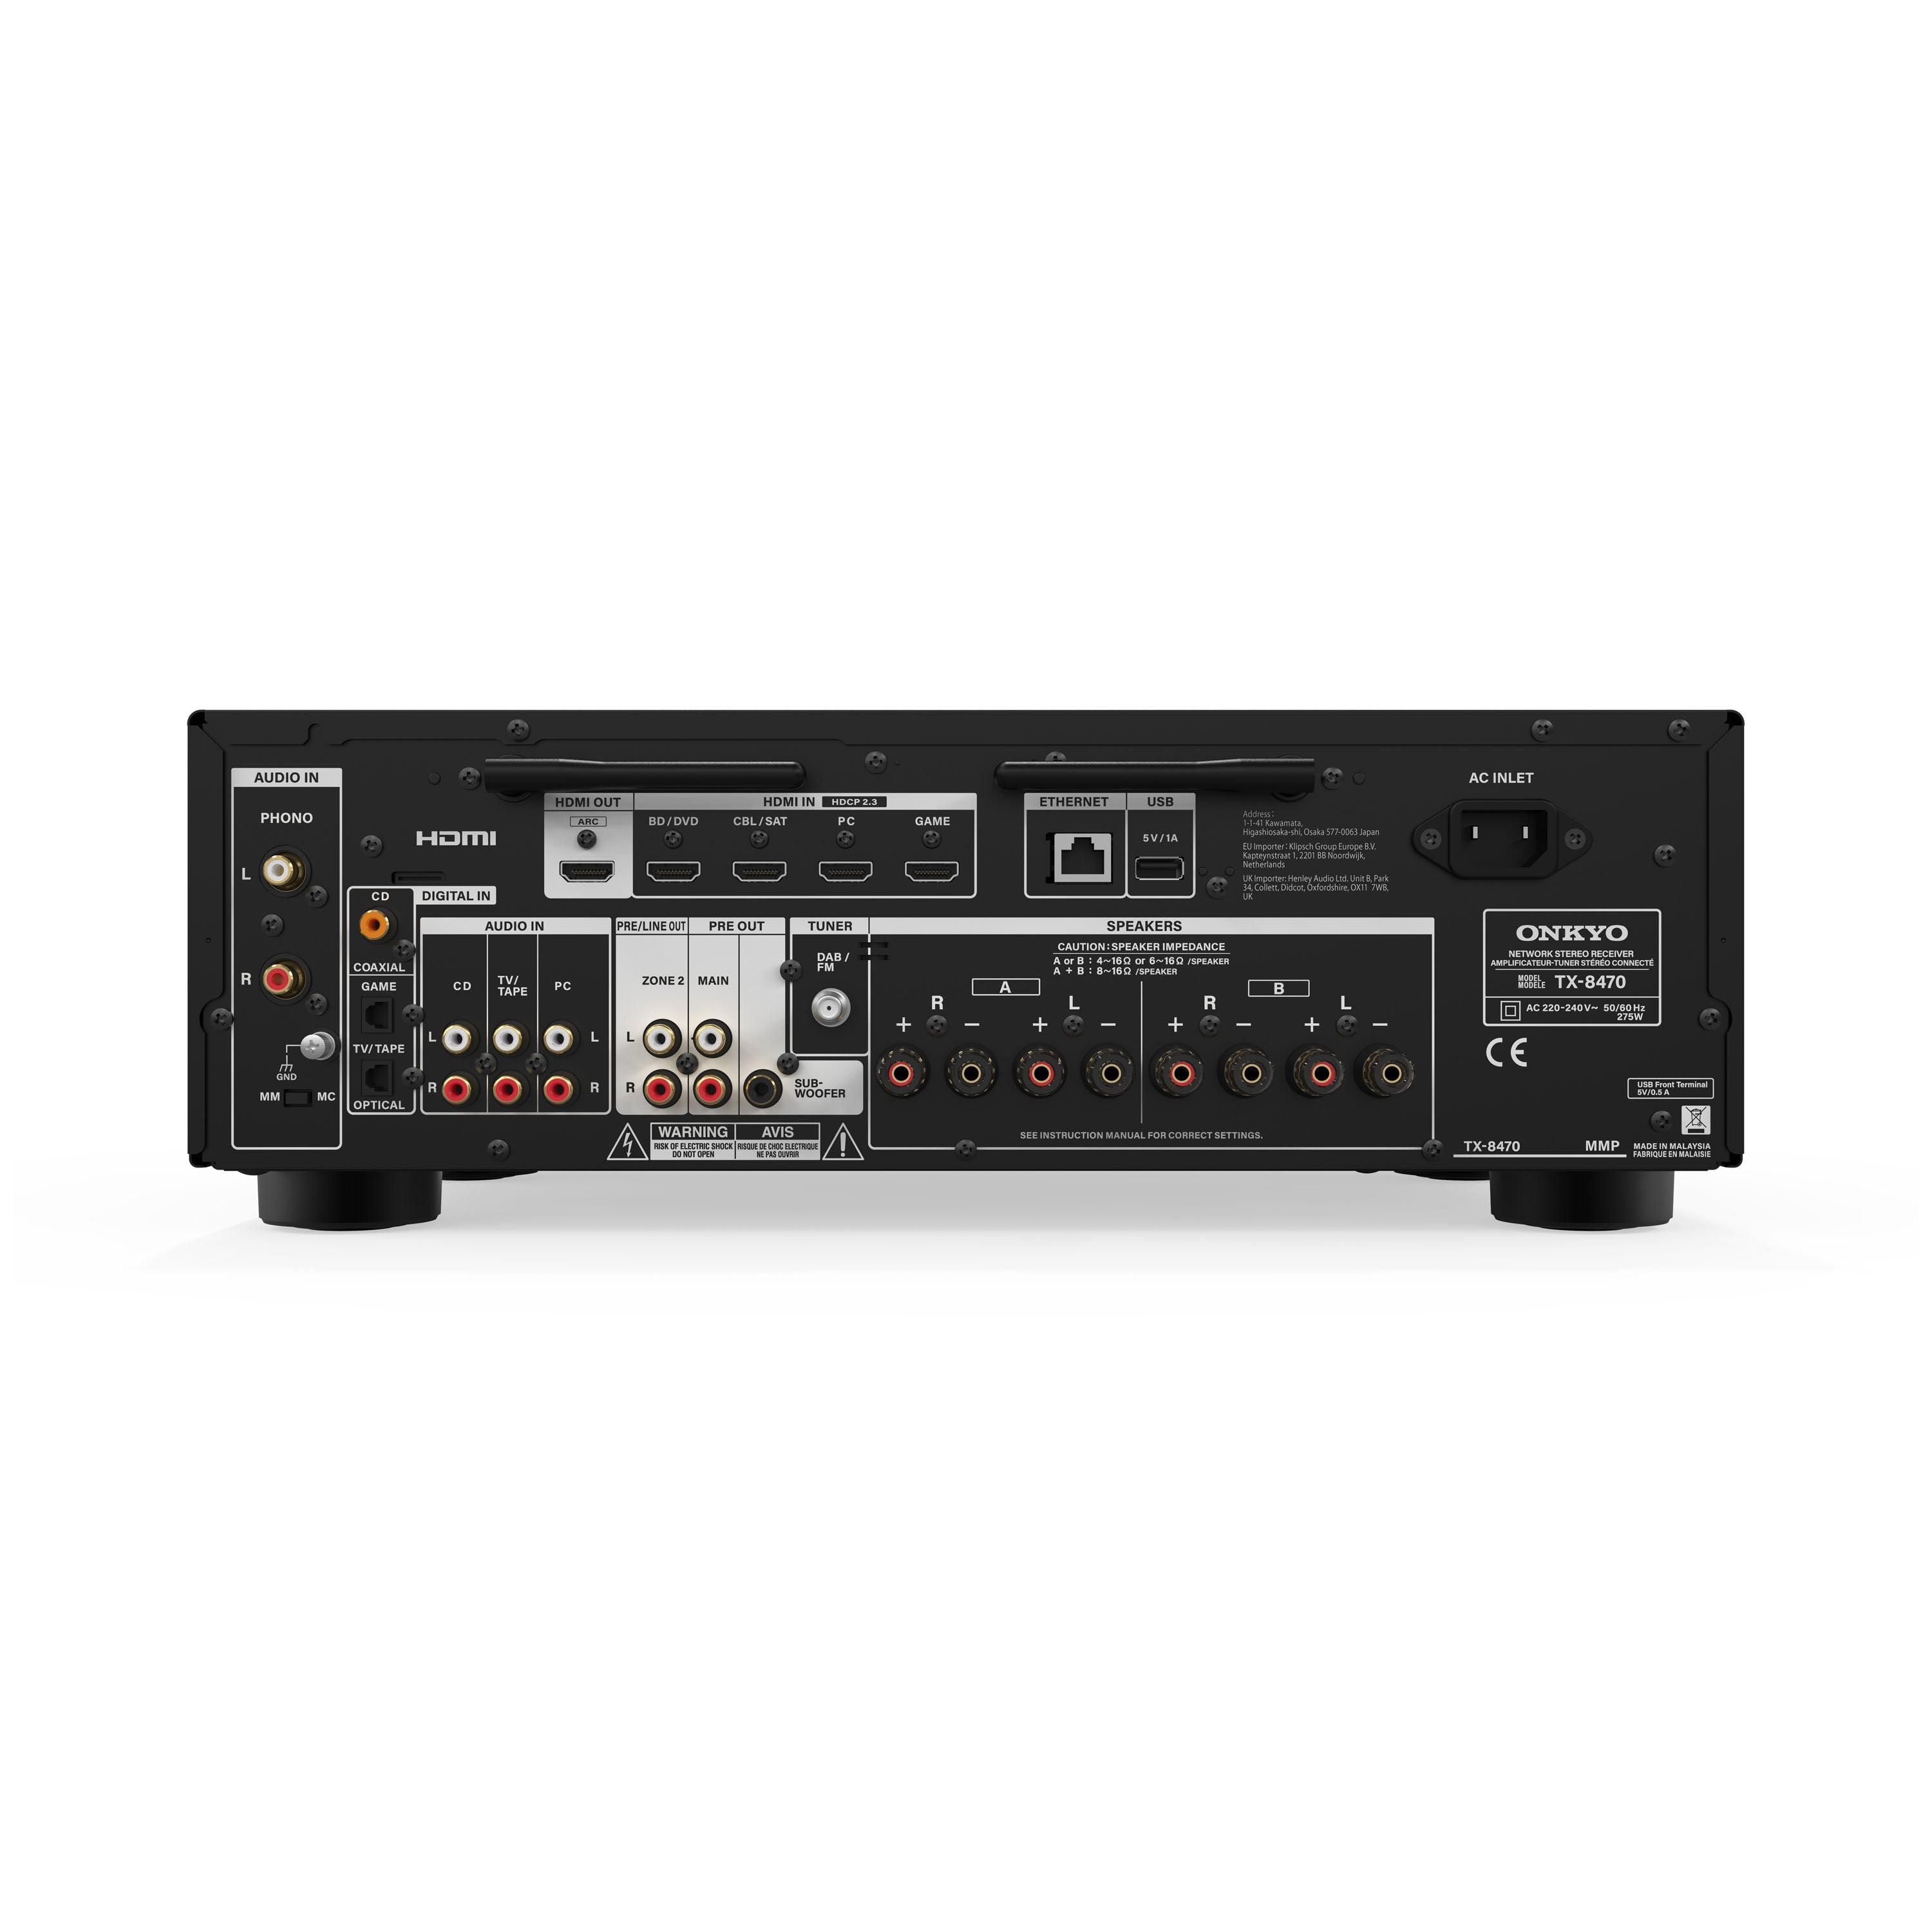 Onkyo TX-8470 Hi-Fi Network Stereo Receiver